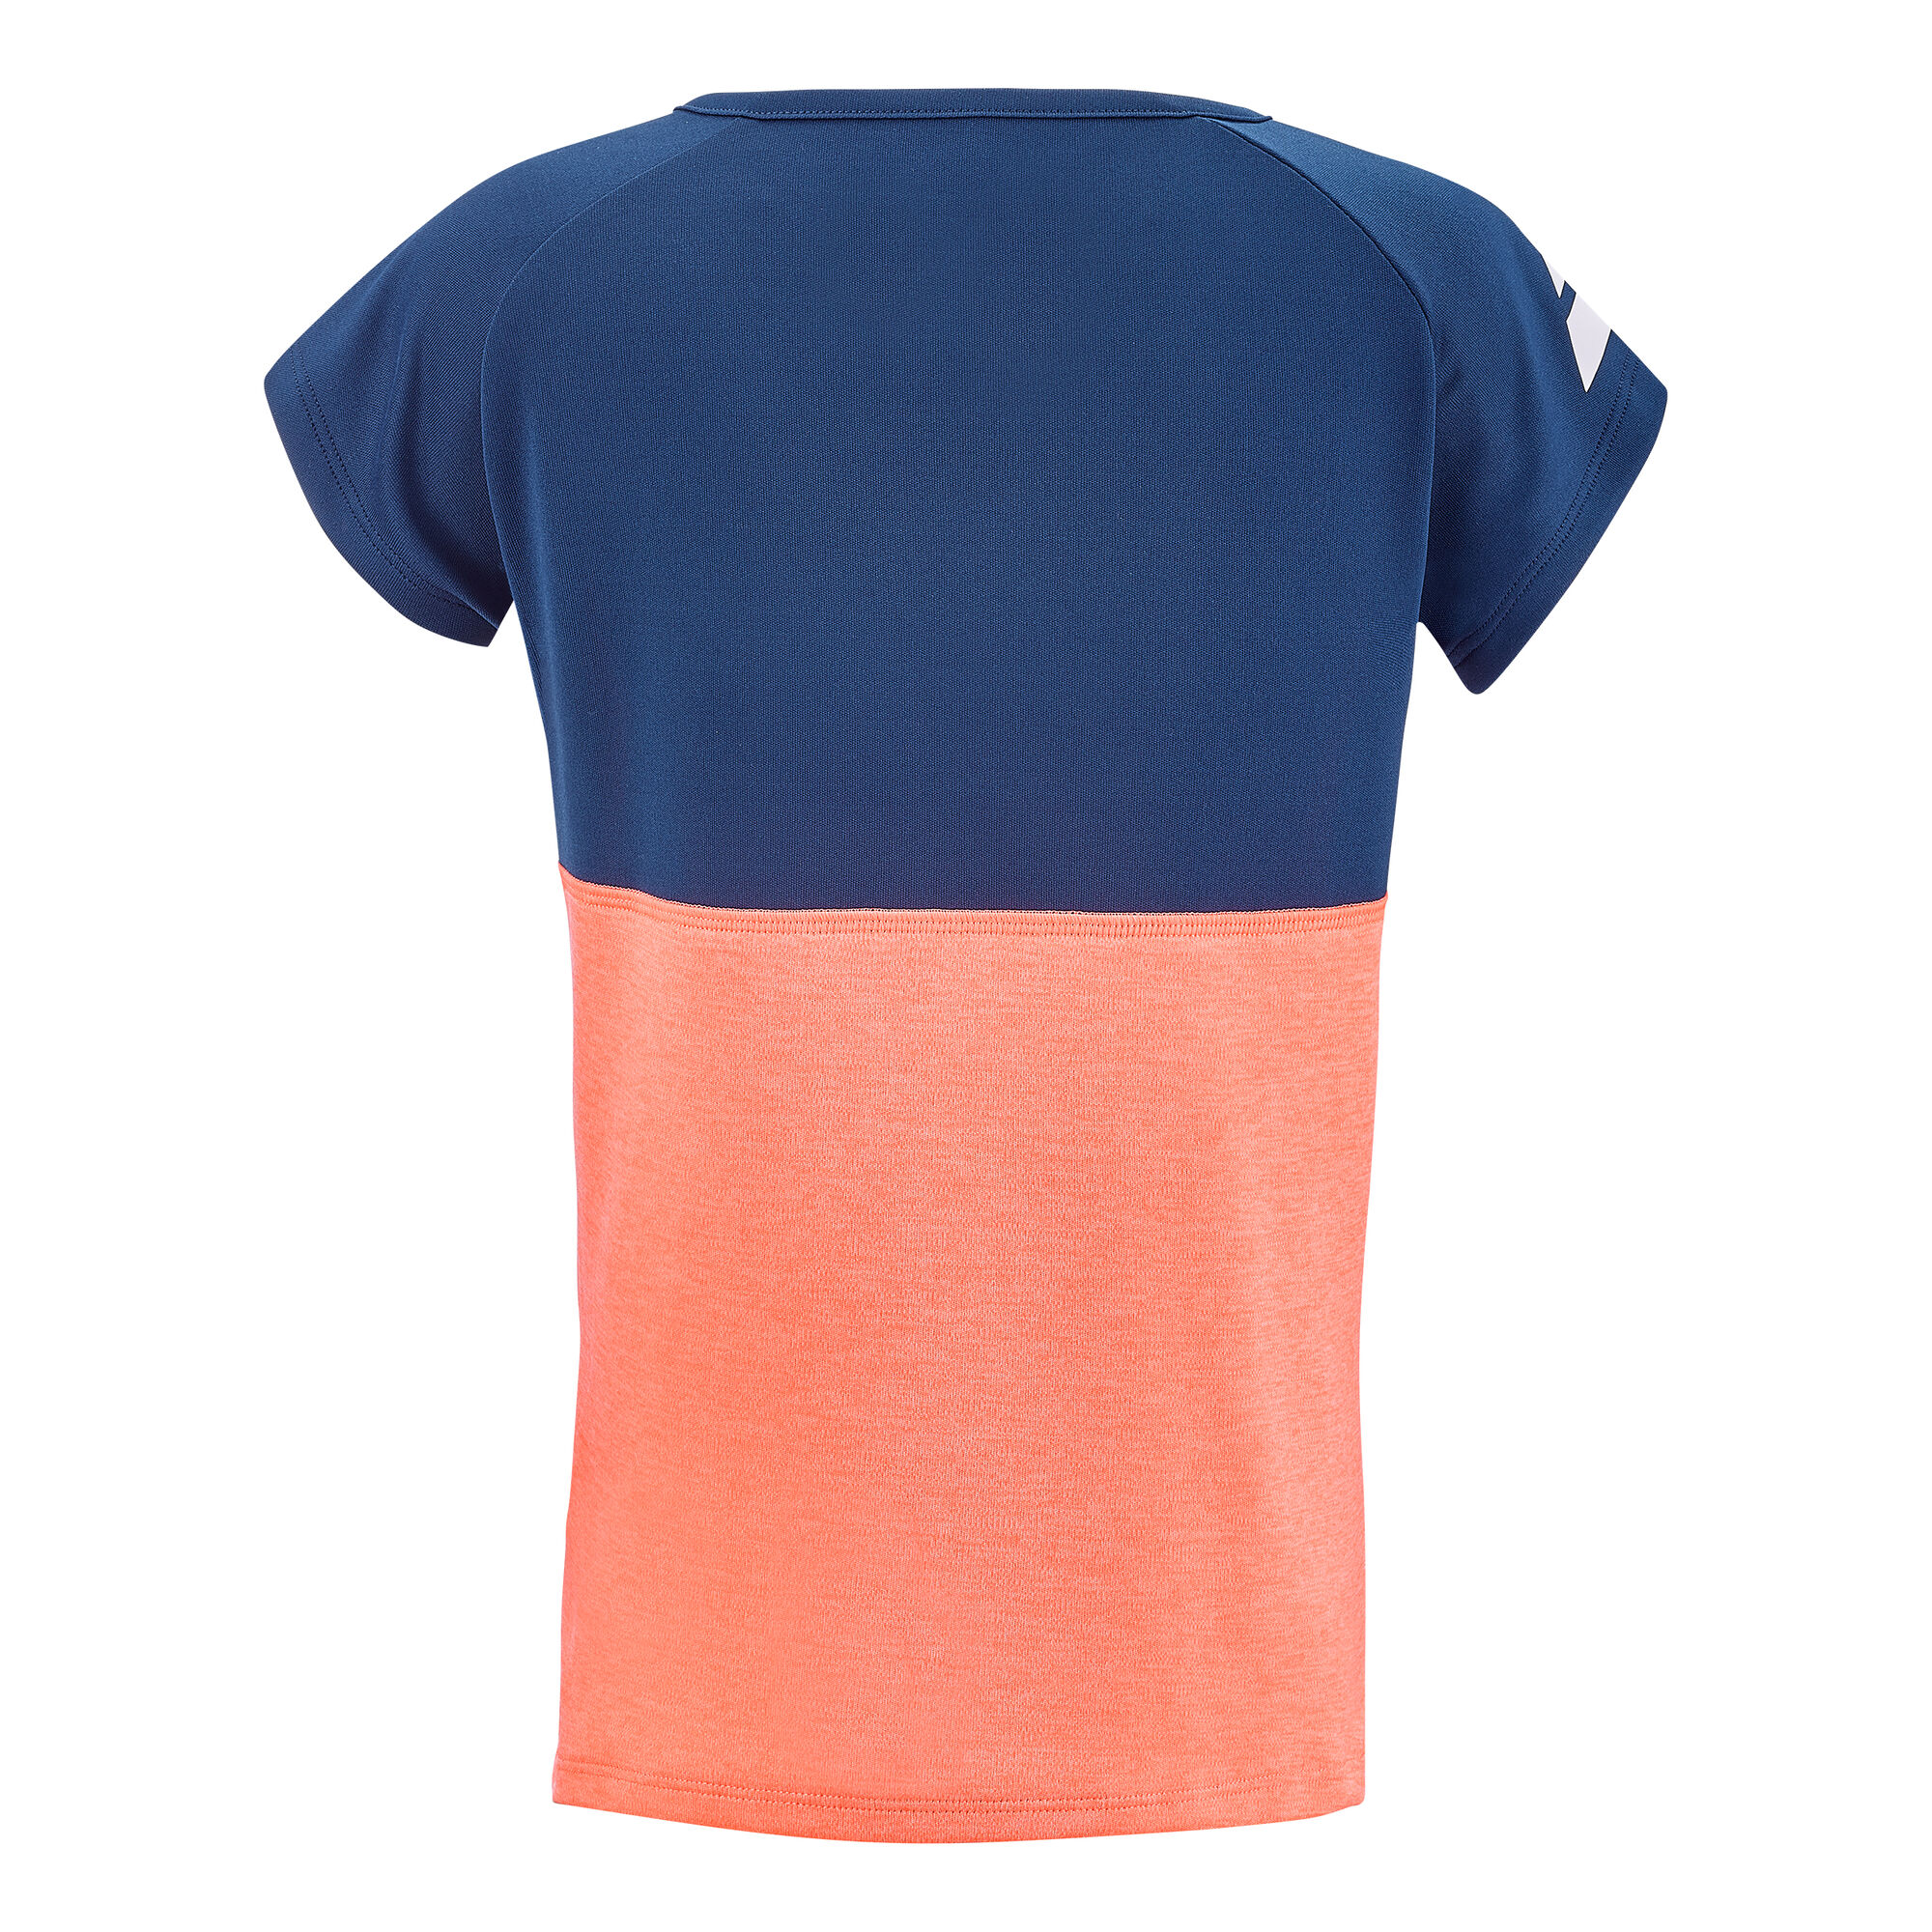 Fantasie Bachelor opleiding Uluru Babolat Play Capsleeve T-shirt Meisjes - Koraal, Blauw online kopen | Tennis -Point